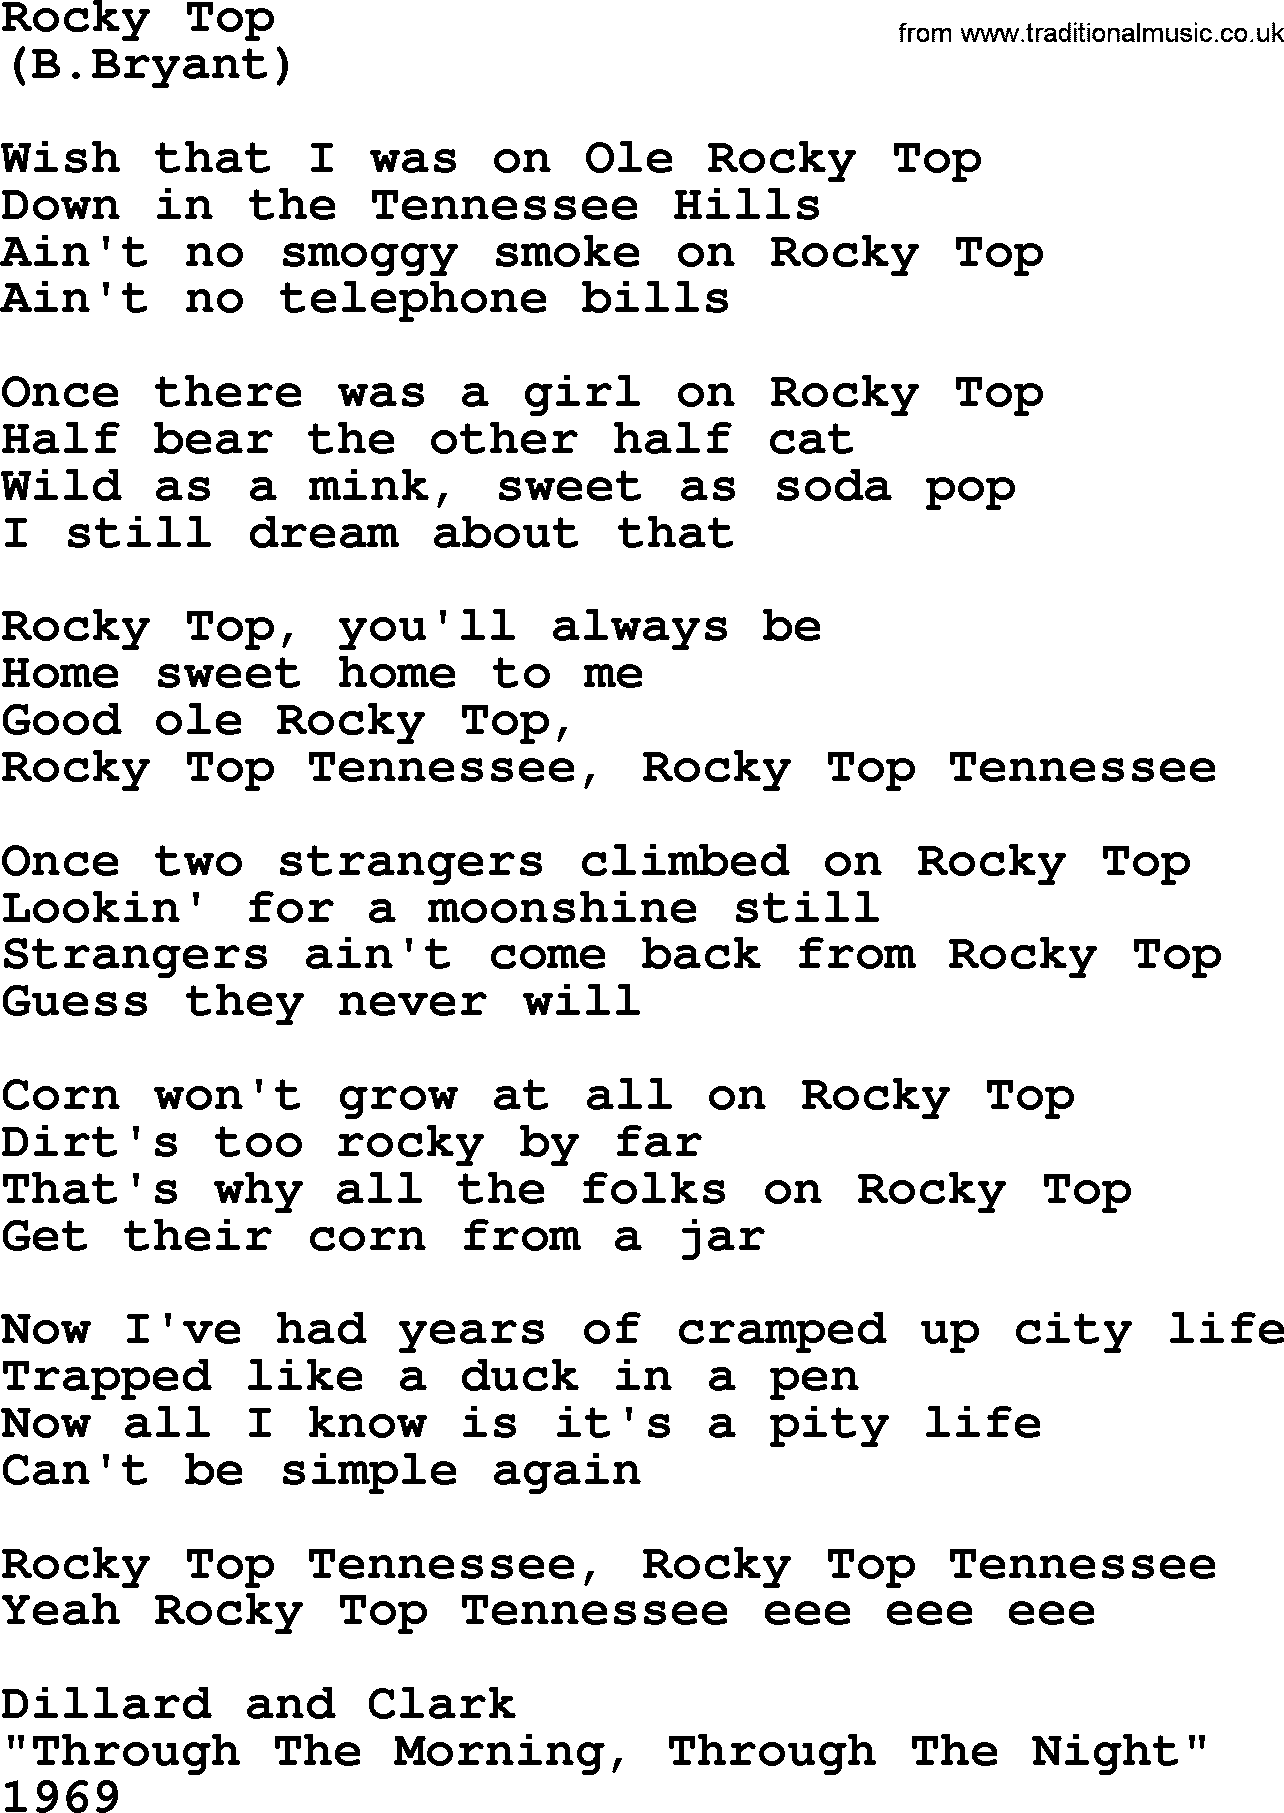 Rocky Top, by The Byrds - lyrics with pdf